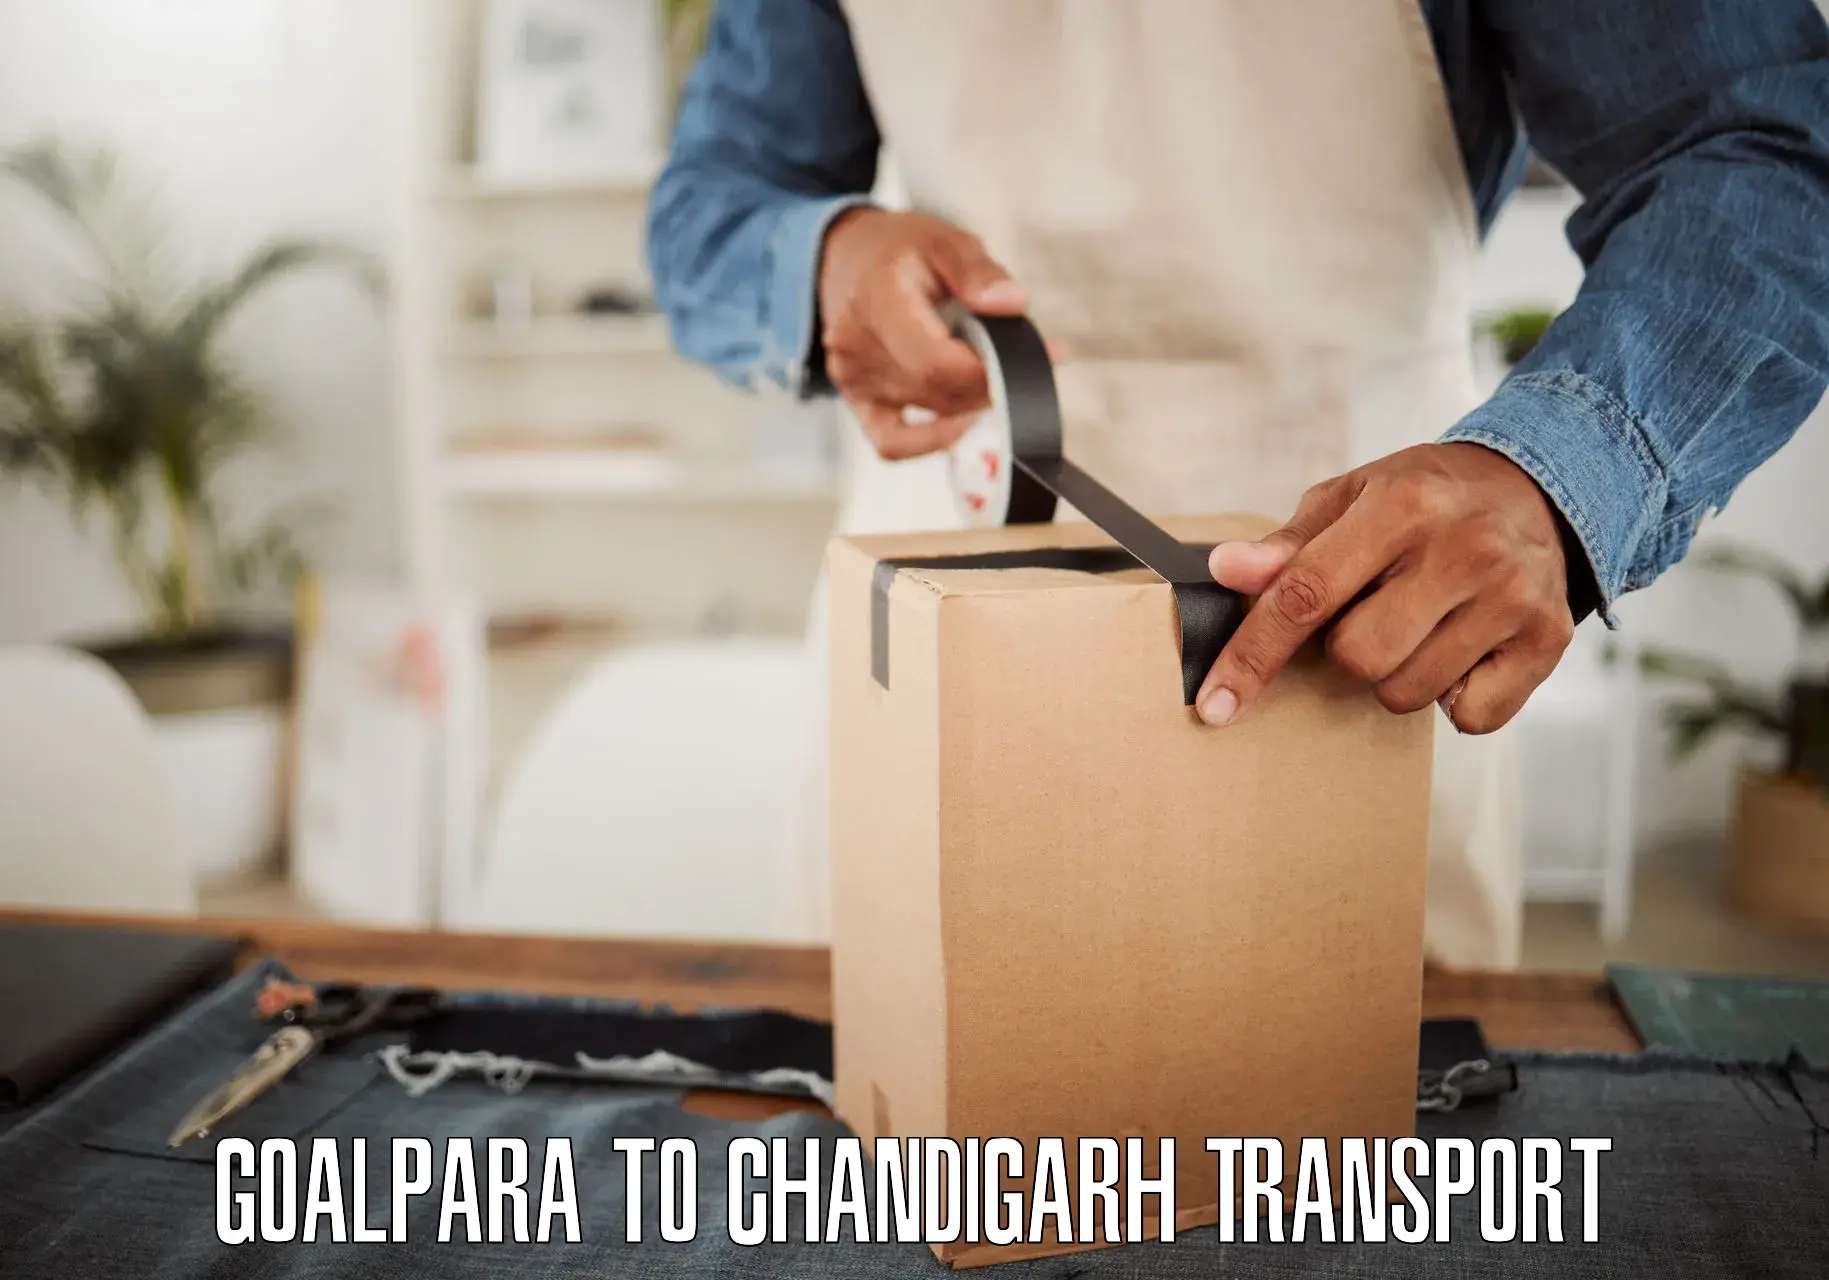 Transport in sharing Goalpara to Chandigarh